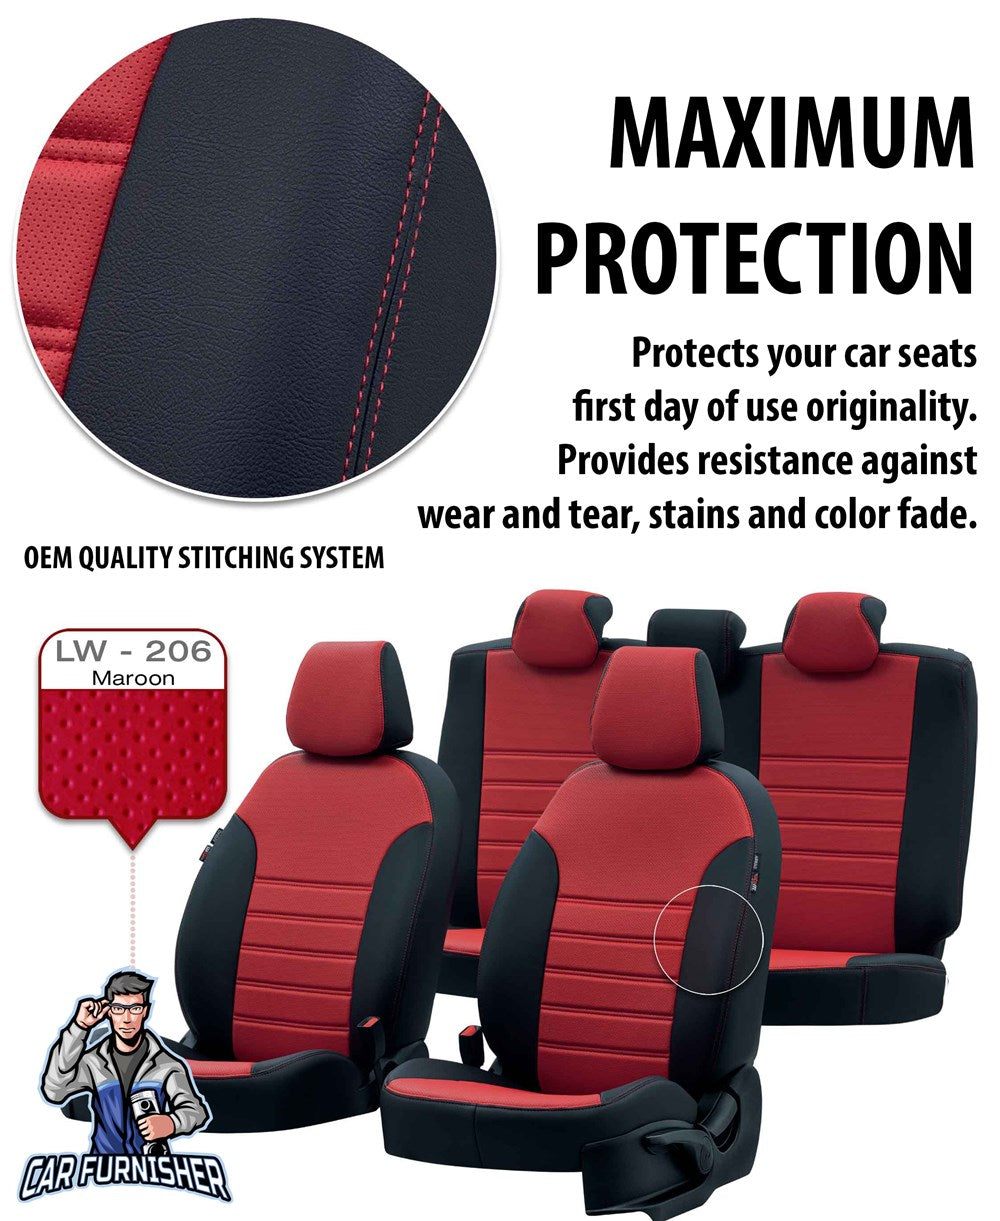 Daihatsu Materia Seat Covers Istanbul Leather Design Burgundy Leather